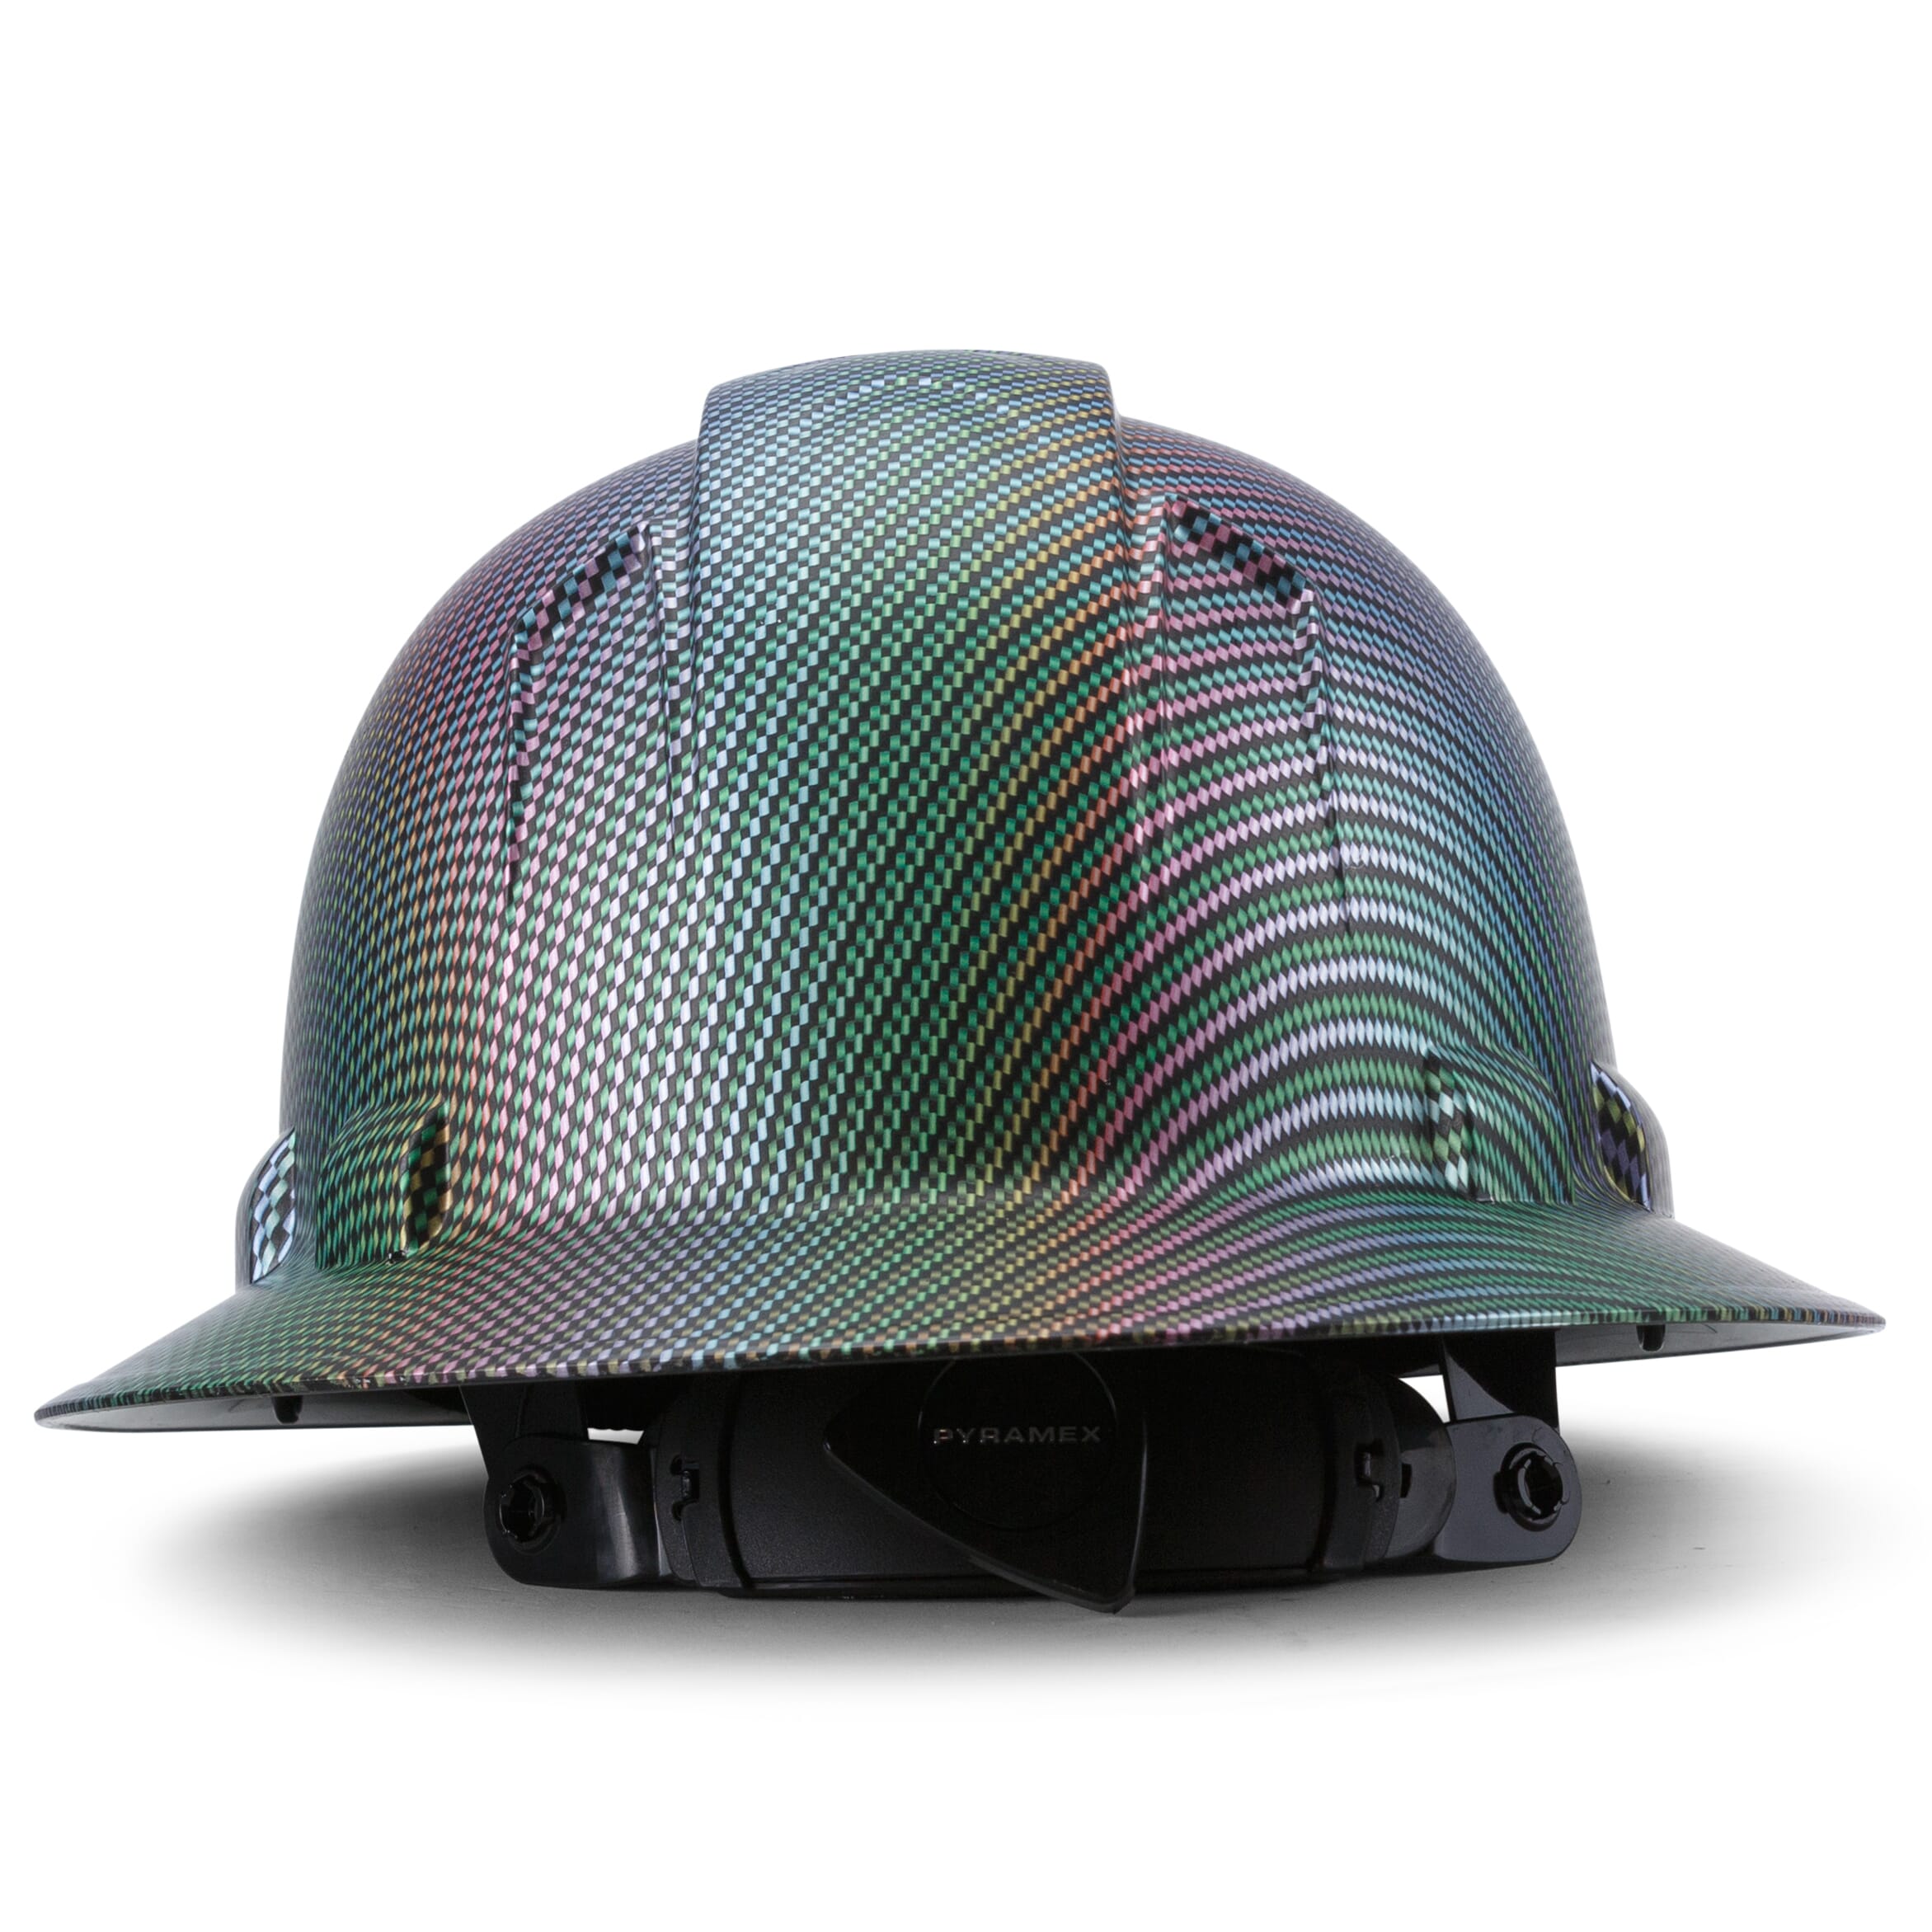 Full Brim Pyramex Hard Hat, Custom Color Weave Design, Safety Helmet, 6 Point